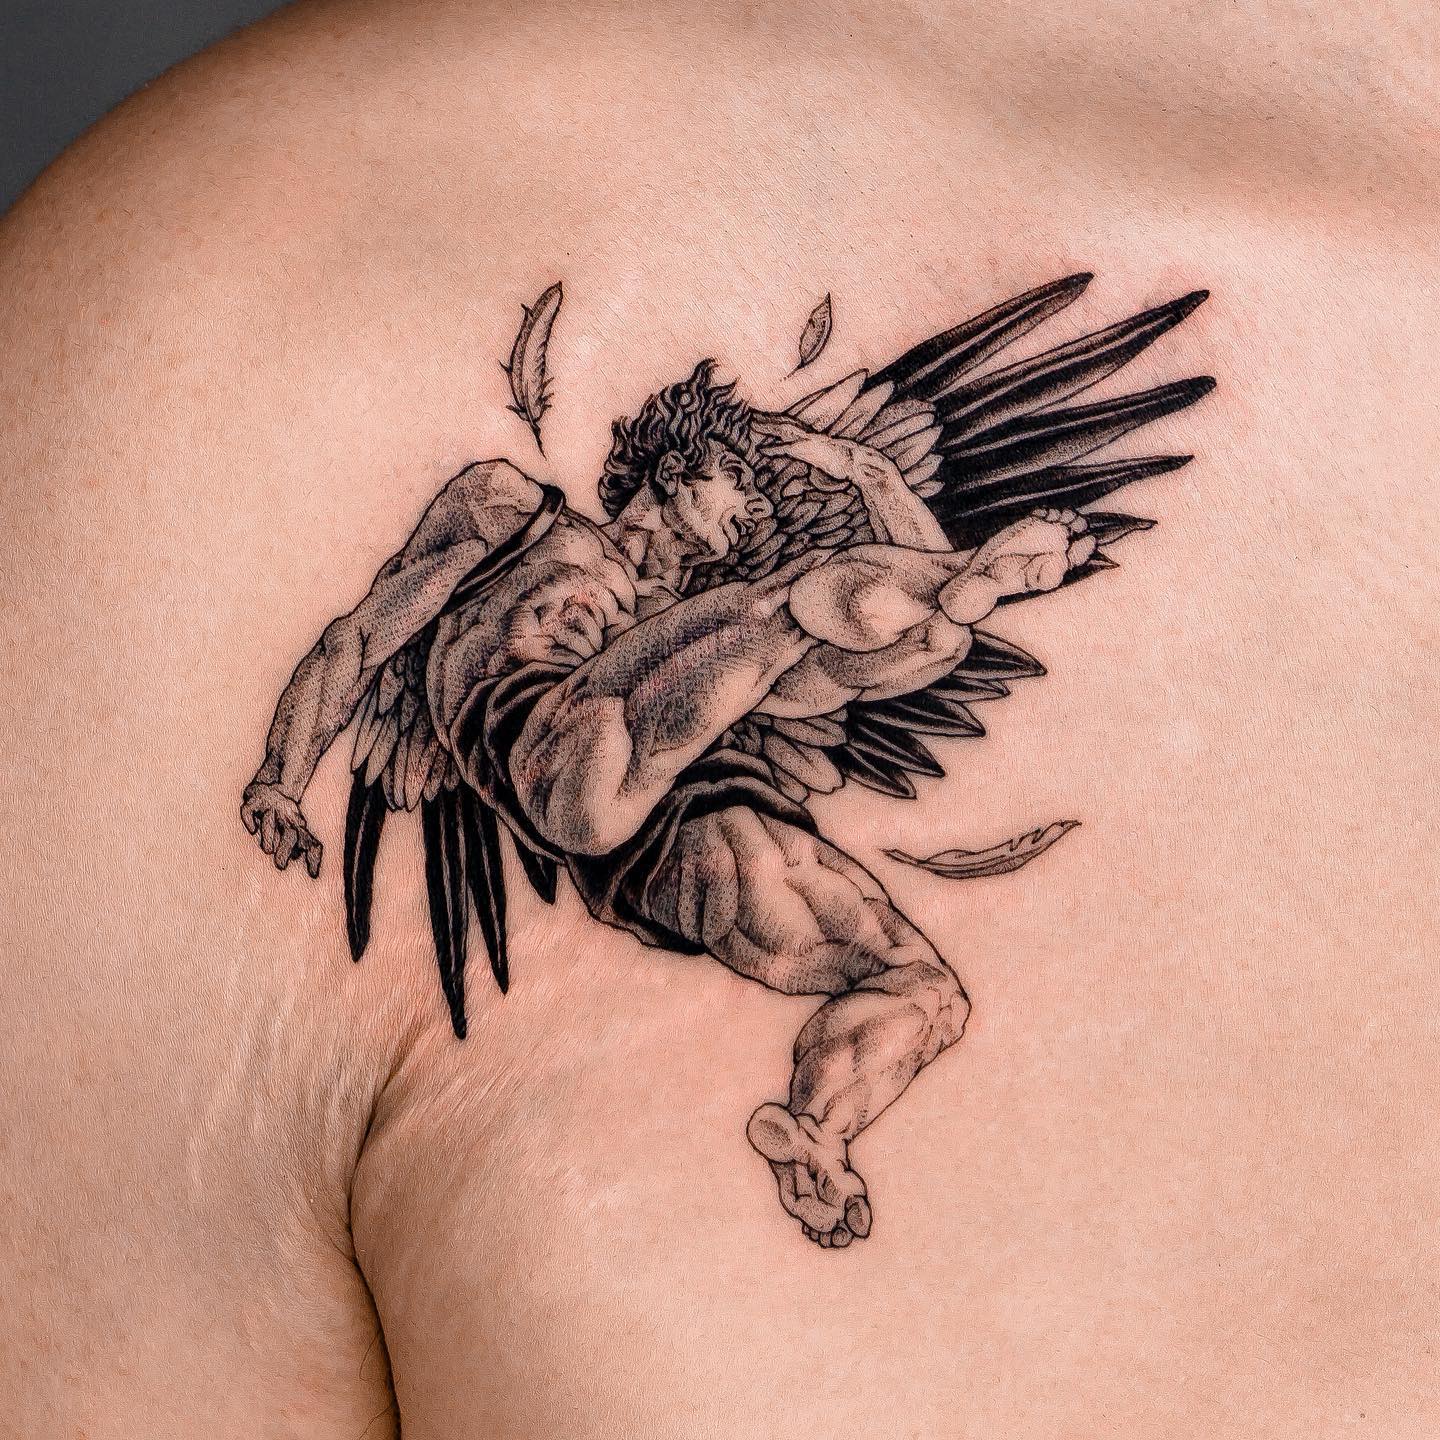 The Fall of Icarus  Tattoo by rafalrudnickioddart on DeviantArt